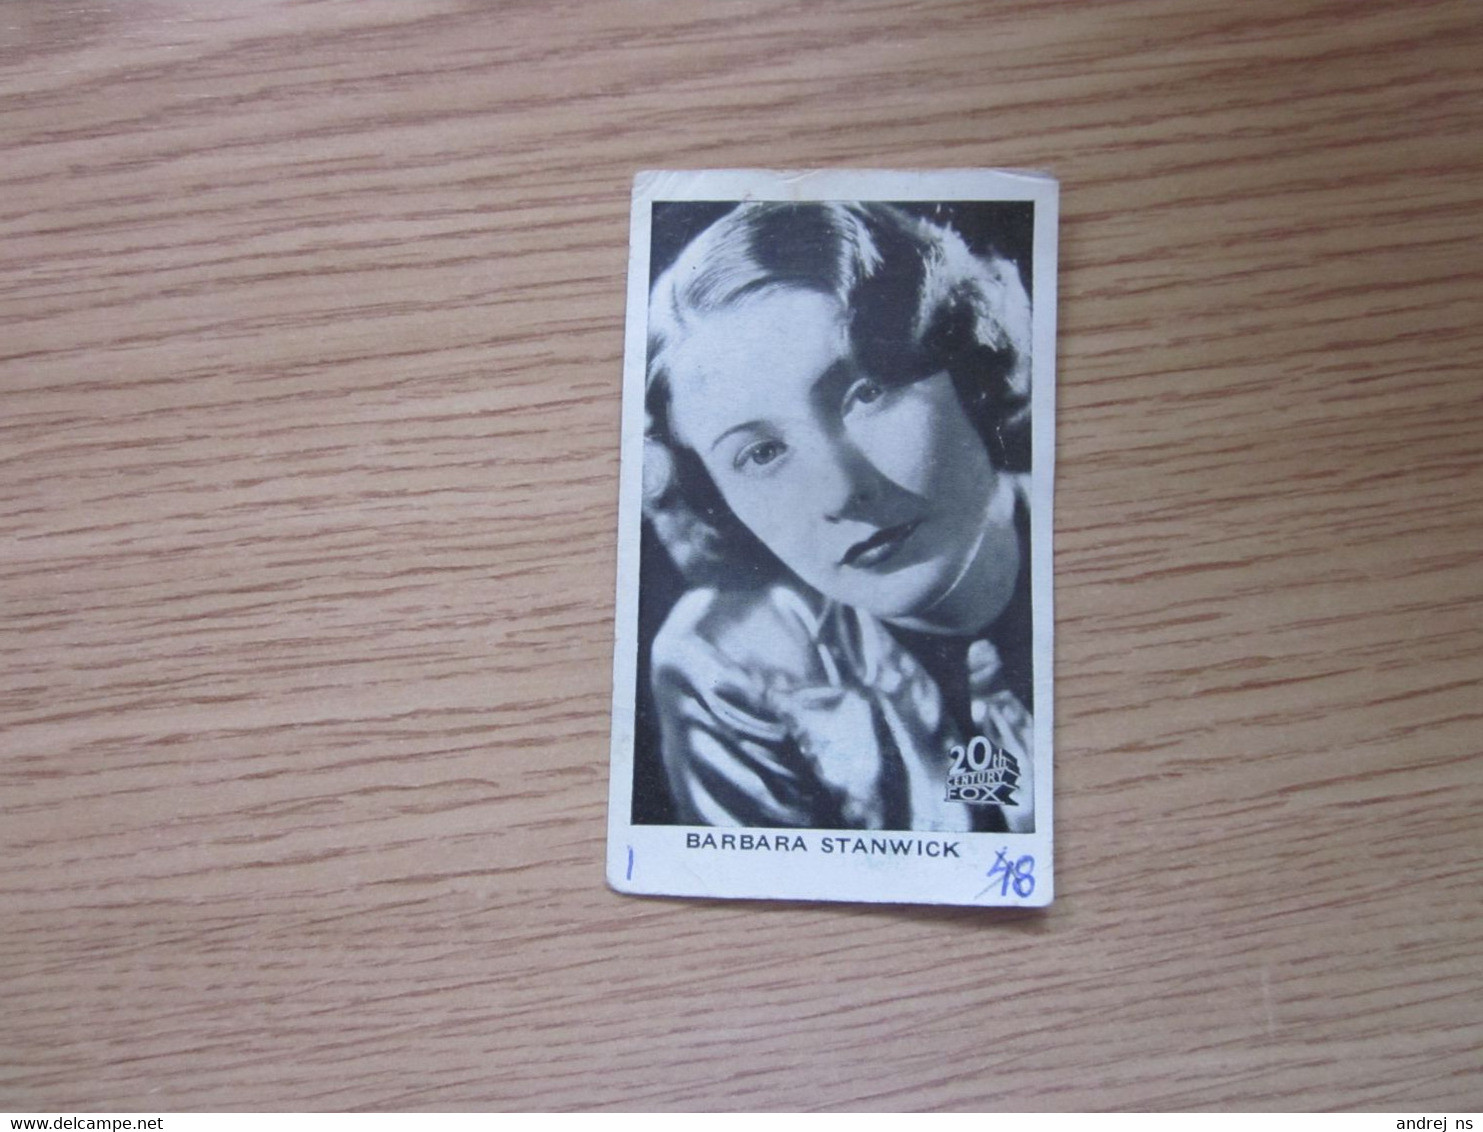 Barbara Staniwick Mirim Kraljica Cokolade 1930's Yugoslavian Kingdom Original Vintage Mirim Chocolate Card 5x8 Cm - Actors